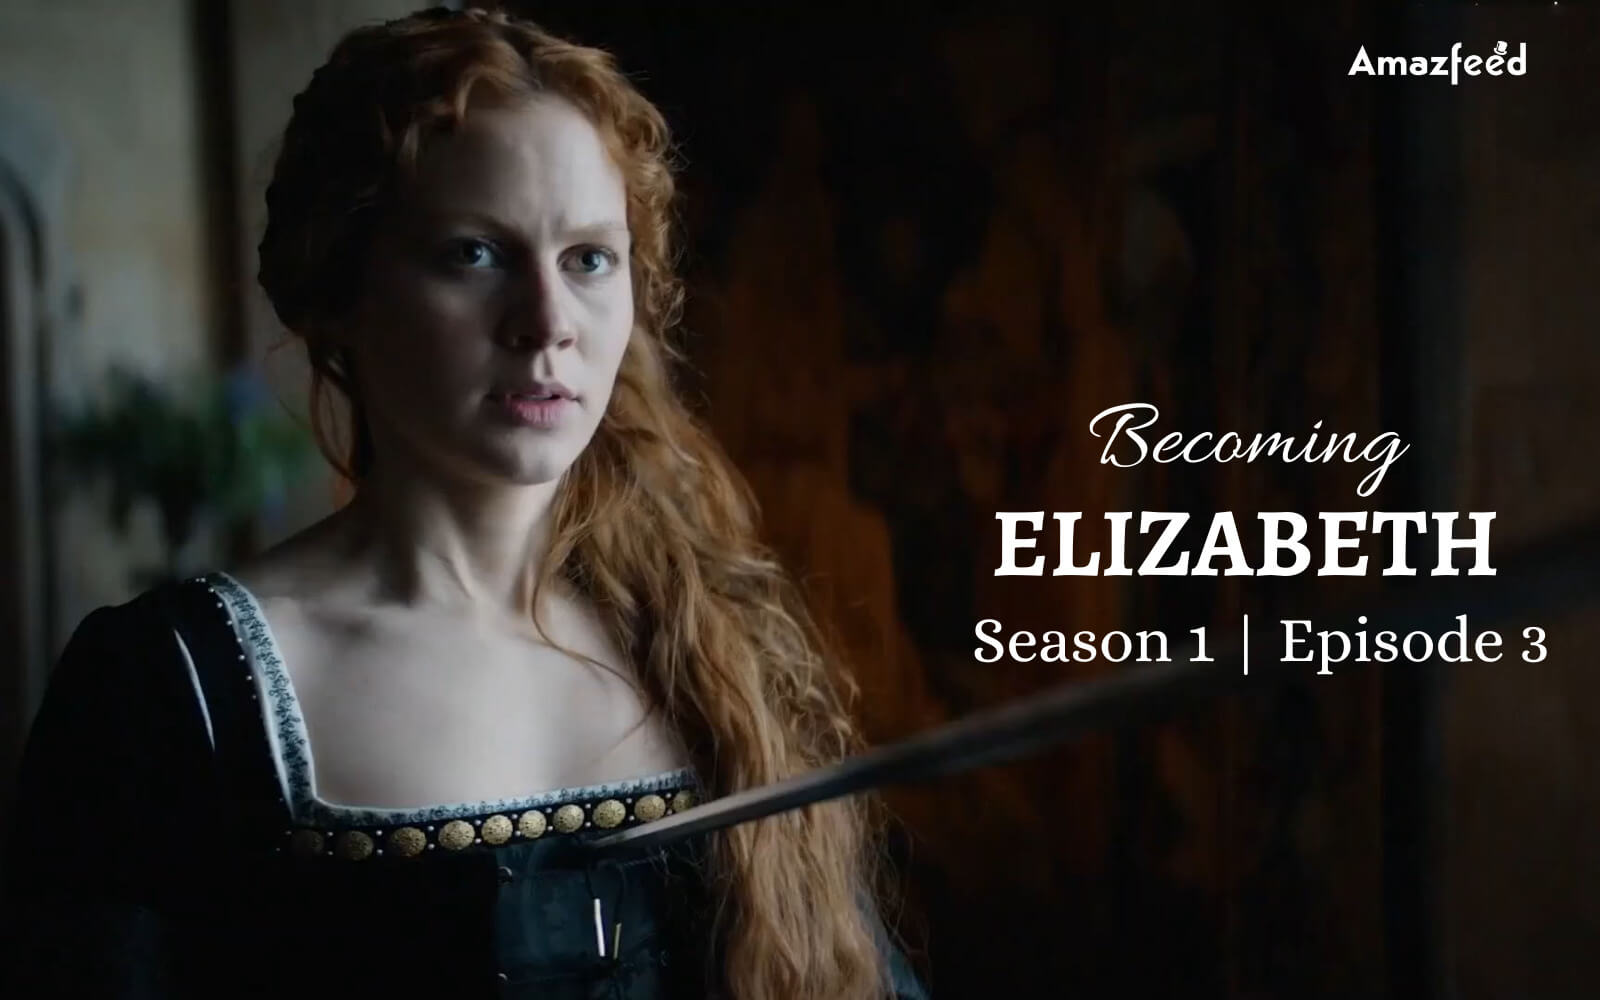 Becoming Elizabeth Season 1 Episode 3 Release date